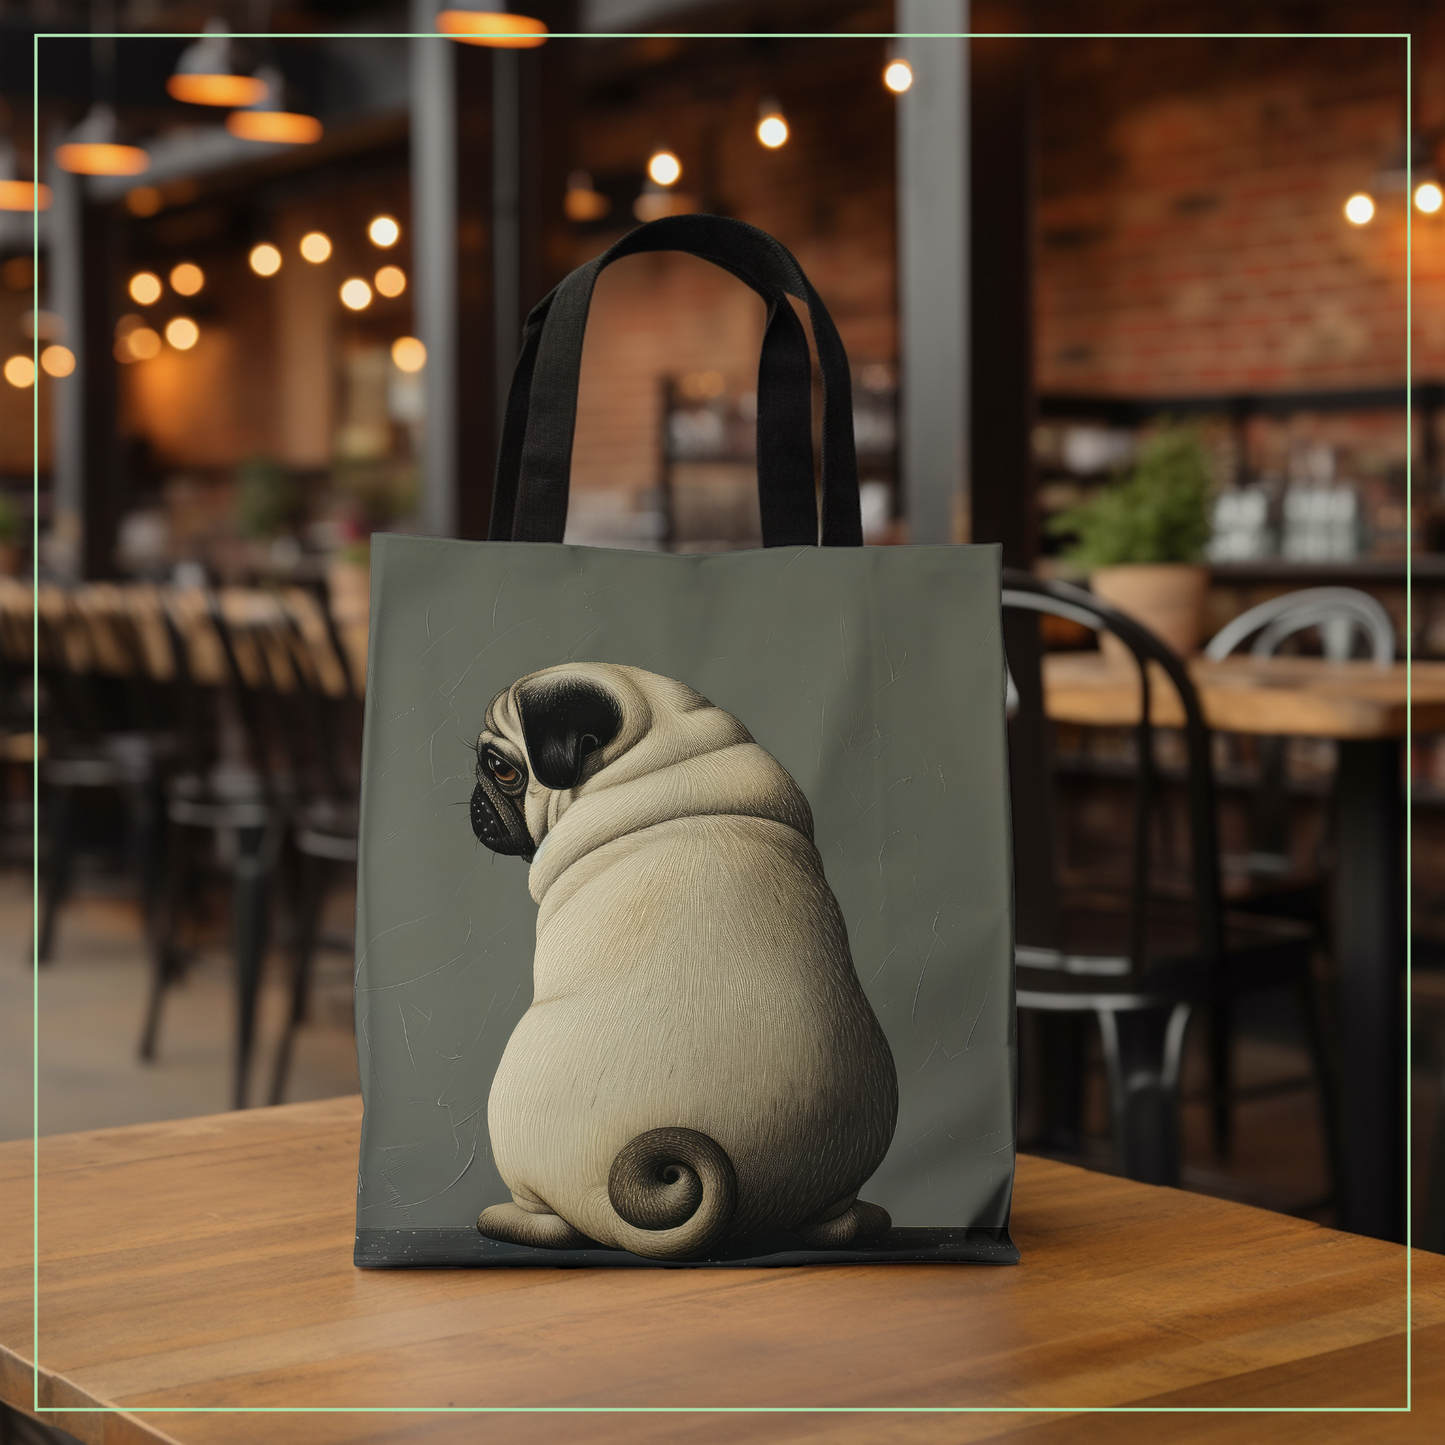 Melancholy - Pug Tote Bag Collection